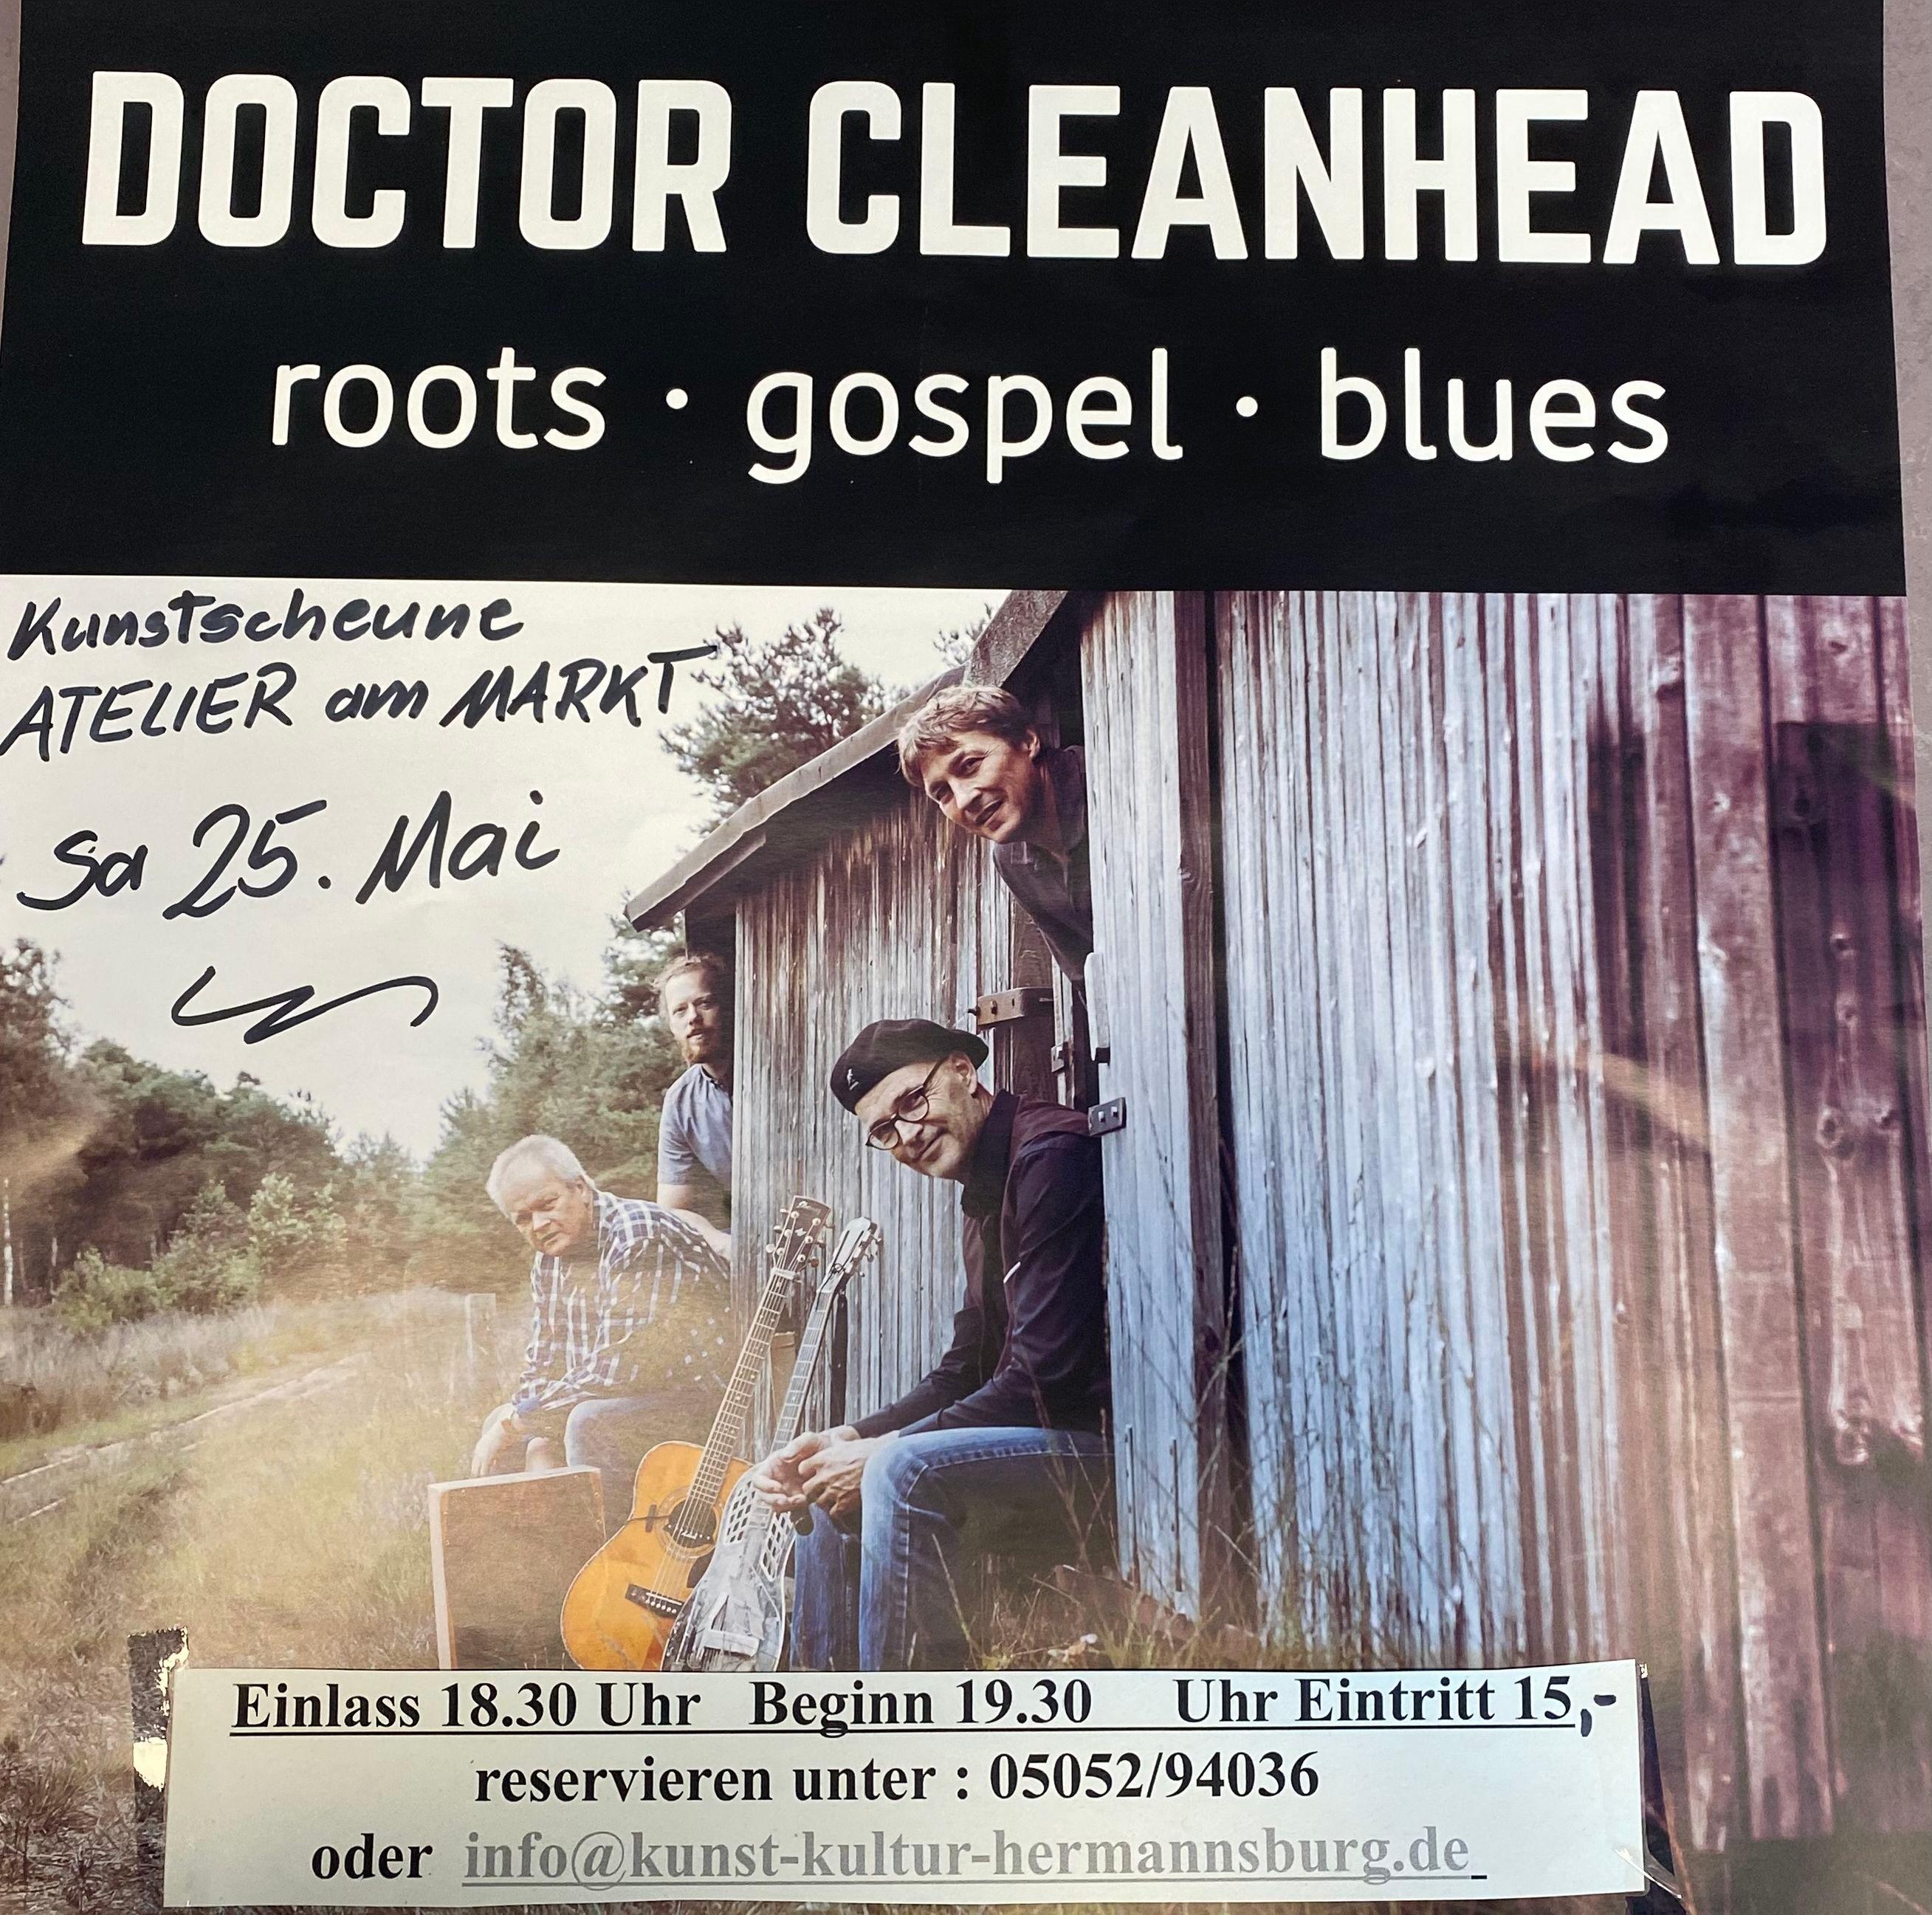 DOCTOR CLEANHEAD roots - gospel - blues